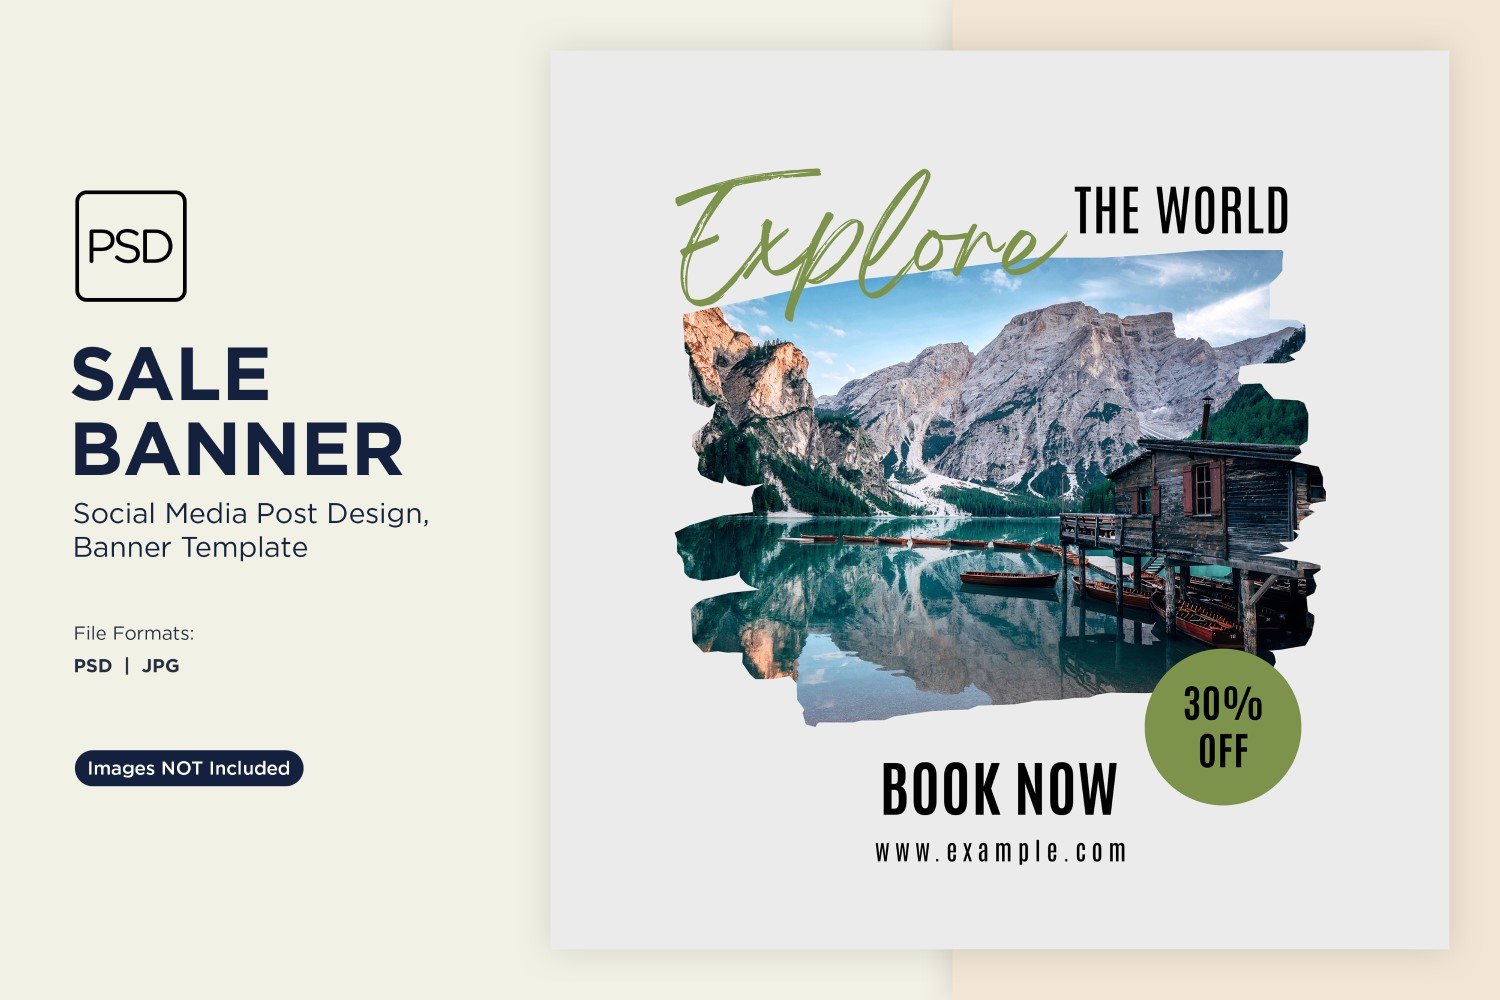 Explore the world travel and adventure sale banner design